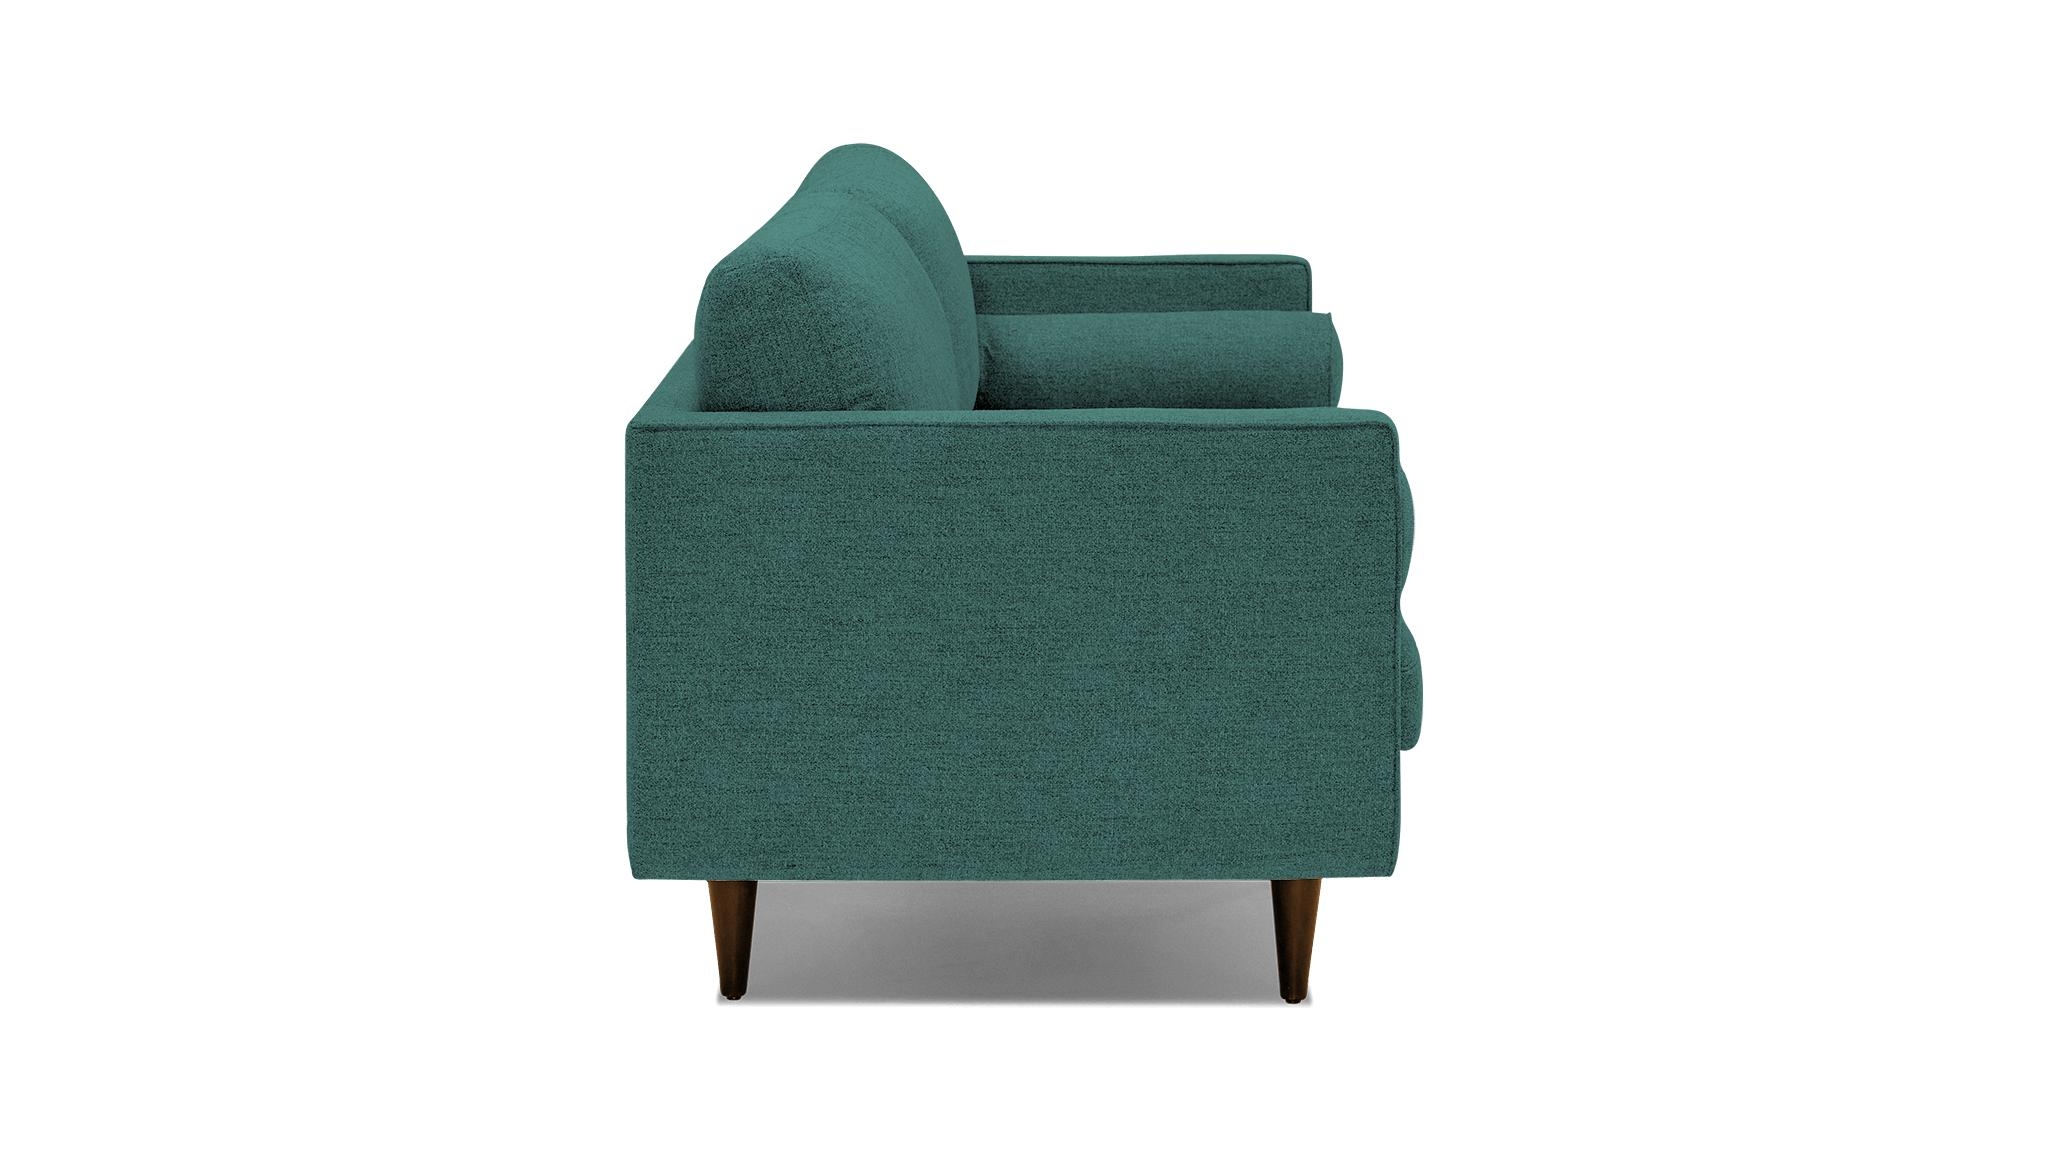 Blue Briar Mid Century Modern Sofa - Prime Peacock - Mocha - Image 2